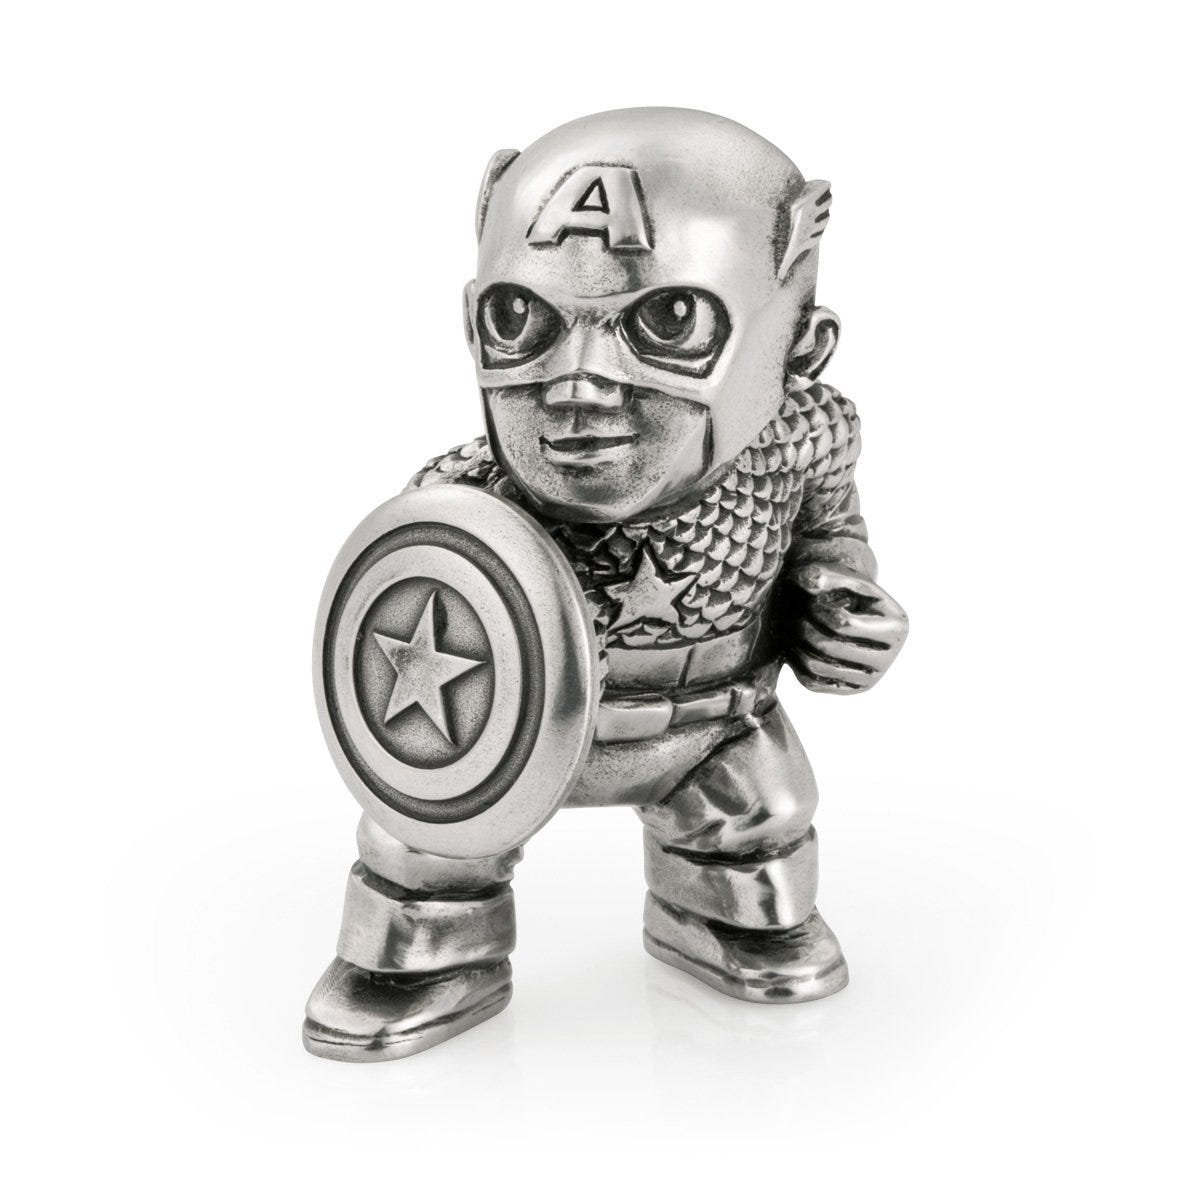 Royal Selangor Marvel Captain America Mini Figurine - Pewter - Notbrand